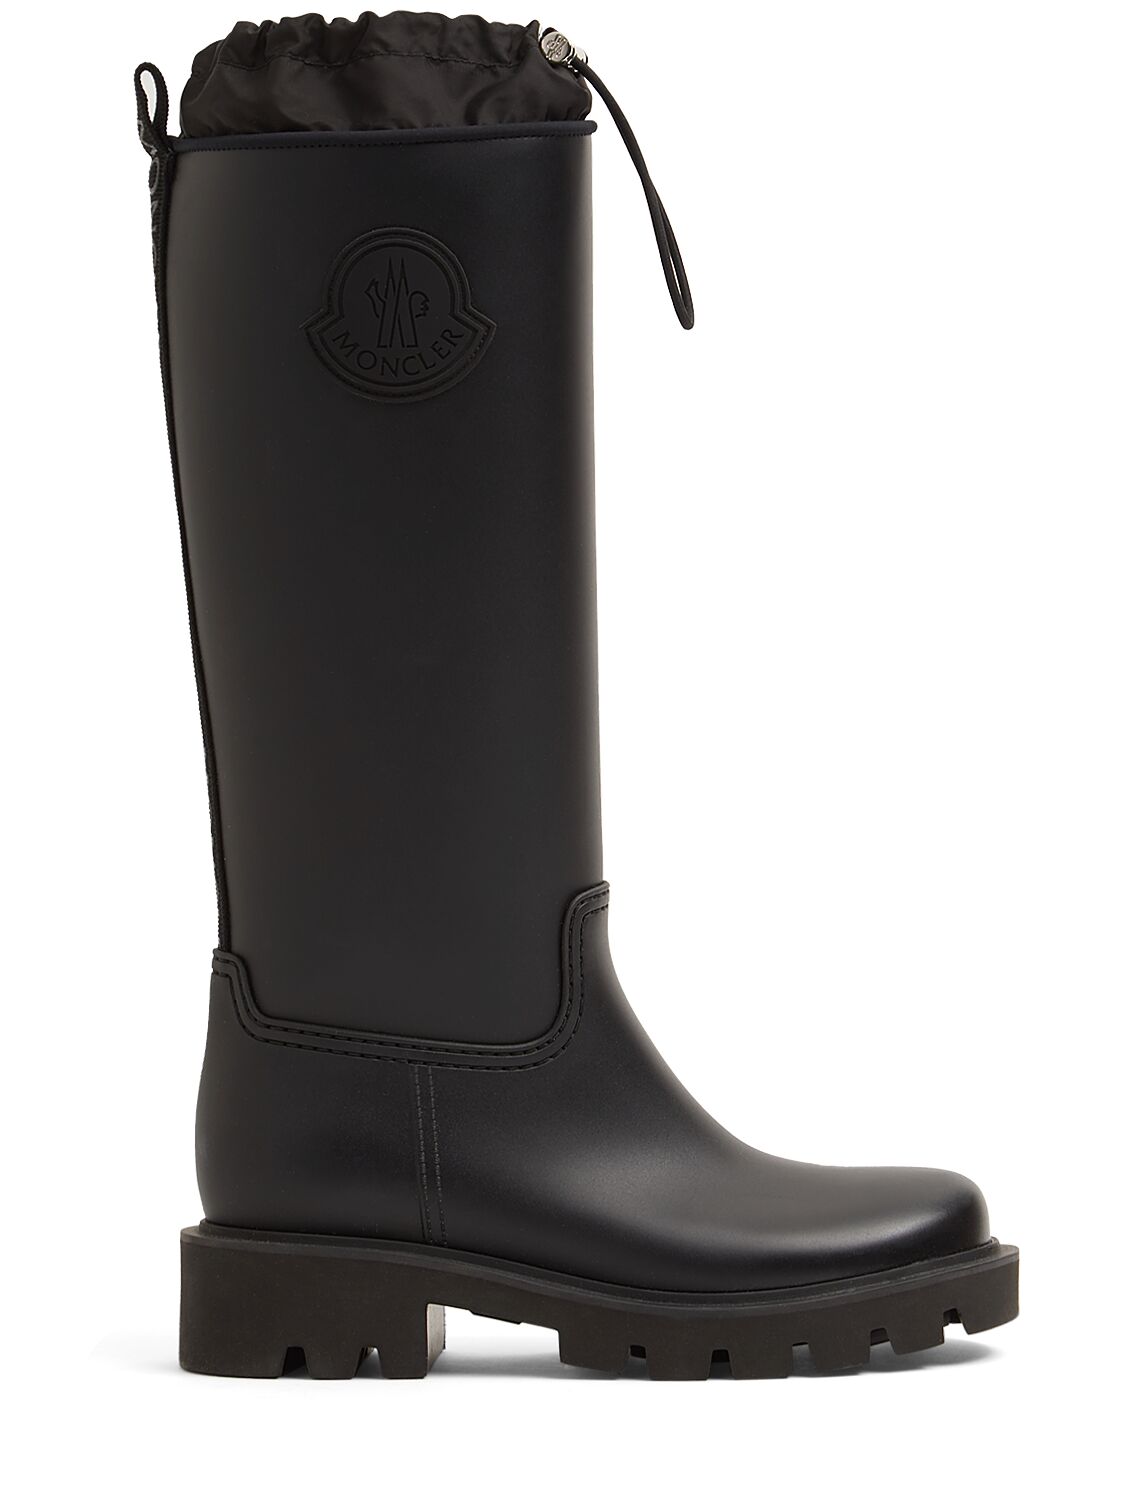 Moncler Kickstream High Rubber Rain Boots In Black